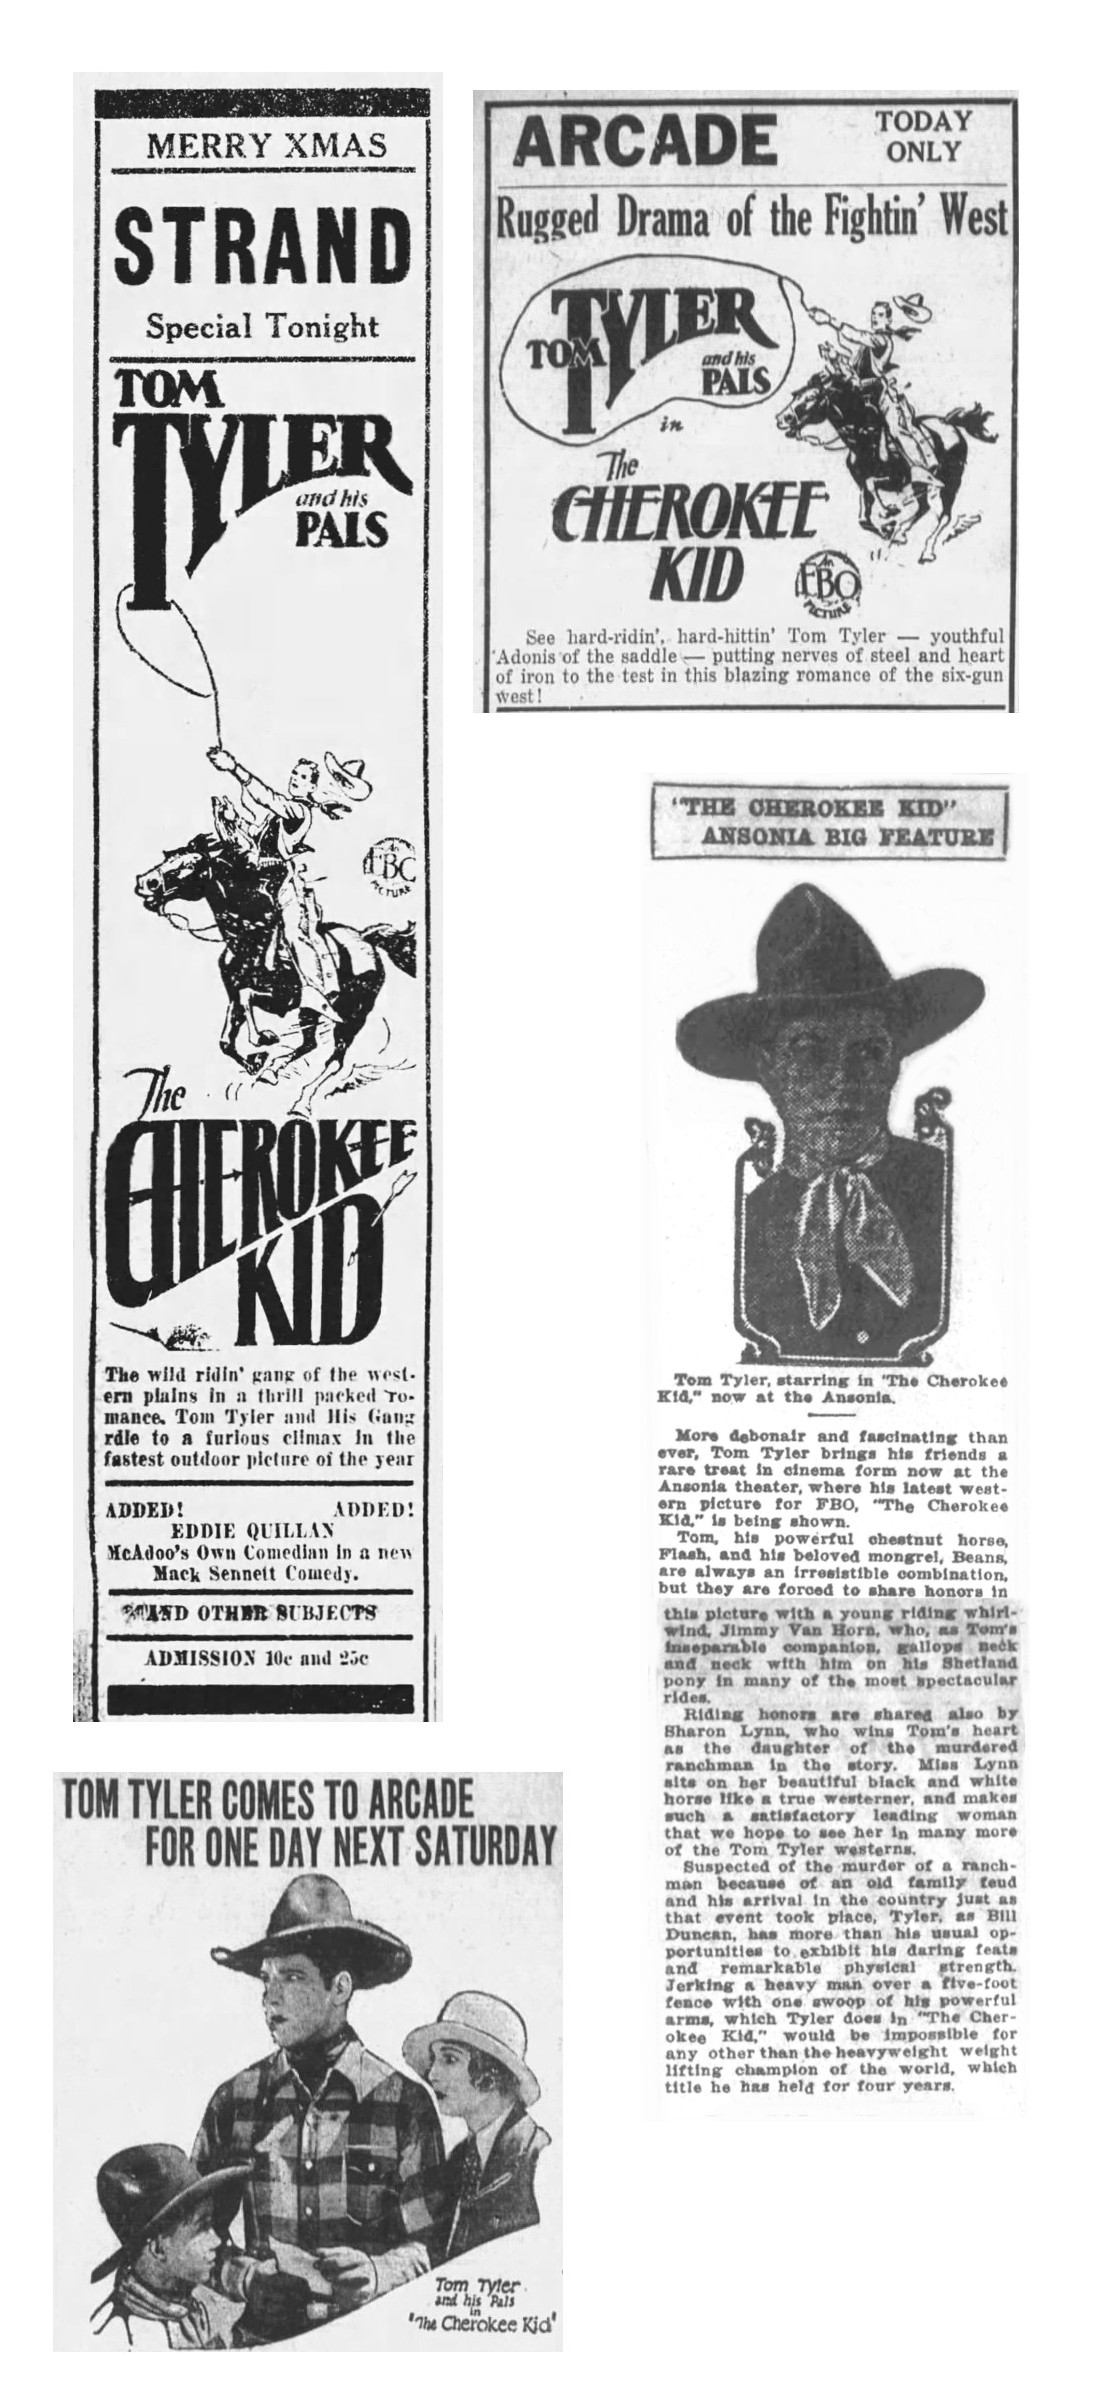 The Cherokee Kid cinema ads film reviews